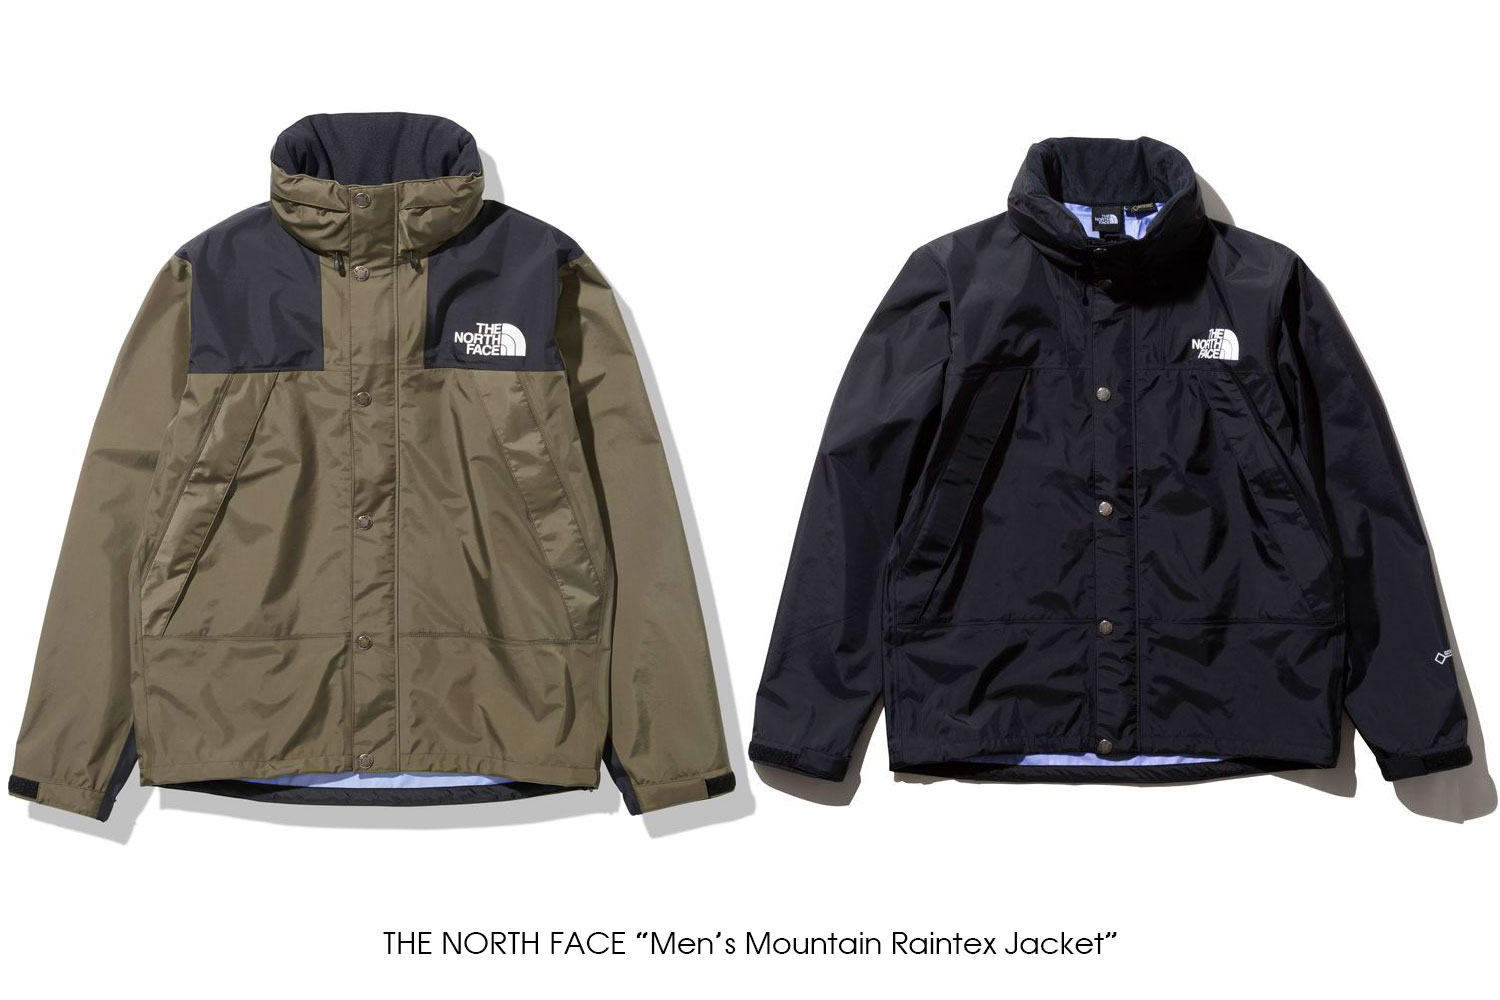 THE NORTH FACE "Men's Mountain Raintex Jacket"